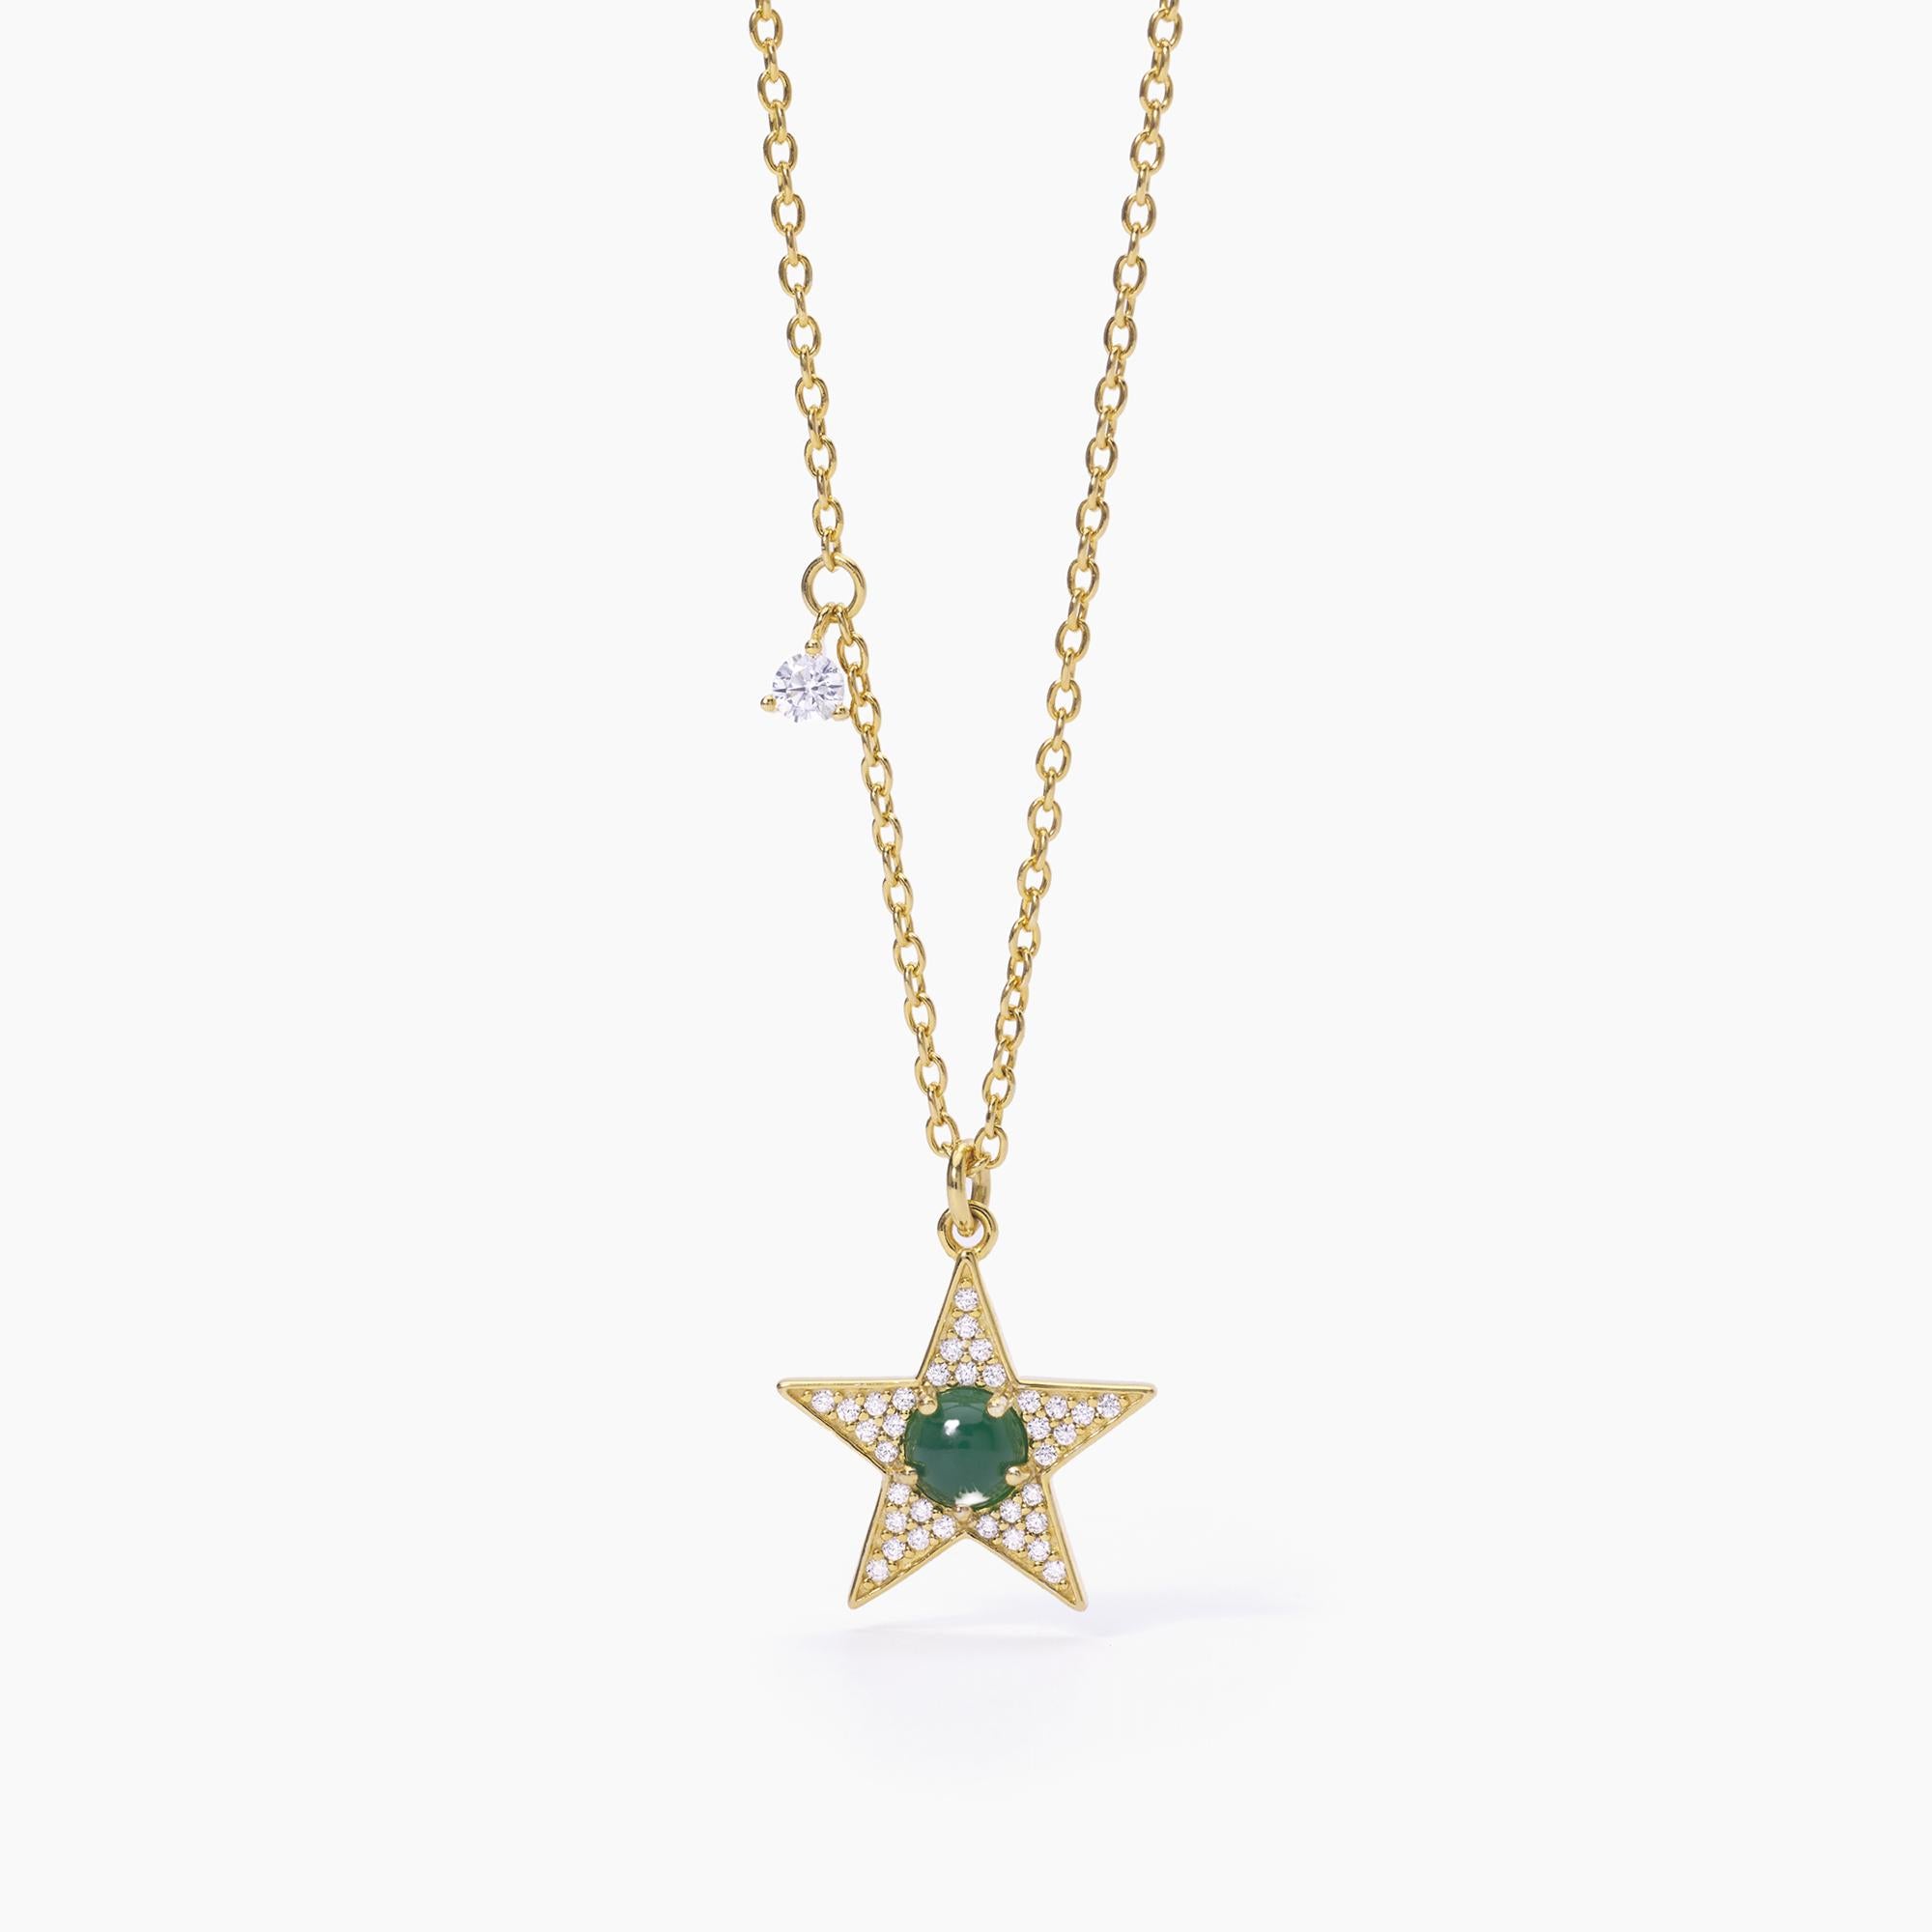 Mabina Femme - Collier étoile dorée et agate verte STARLET - 553514